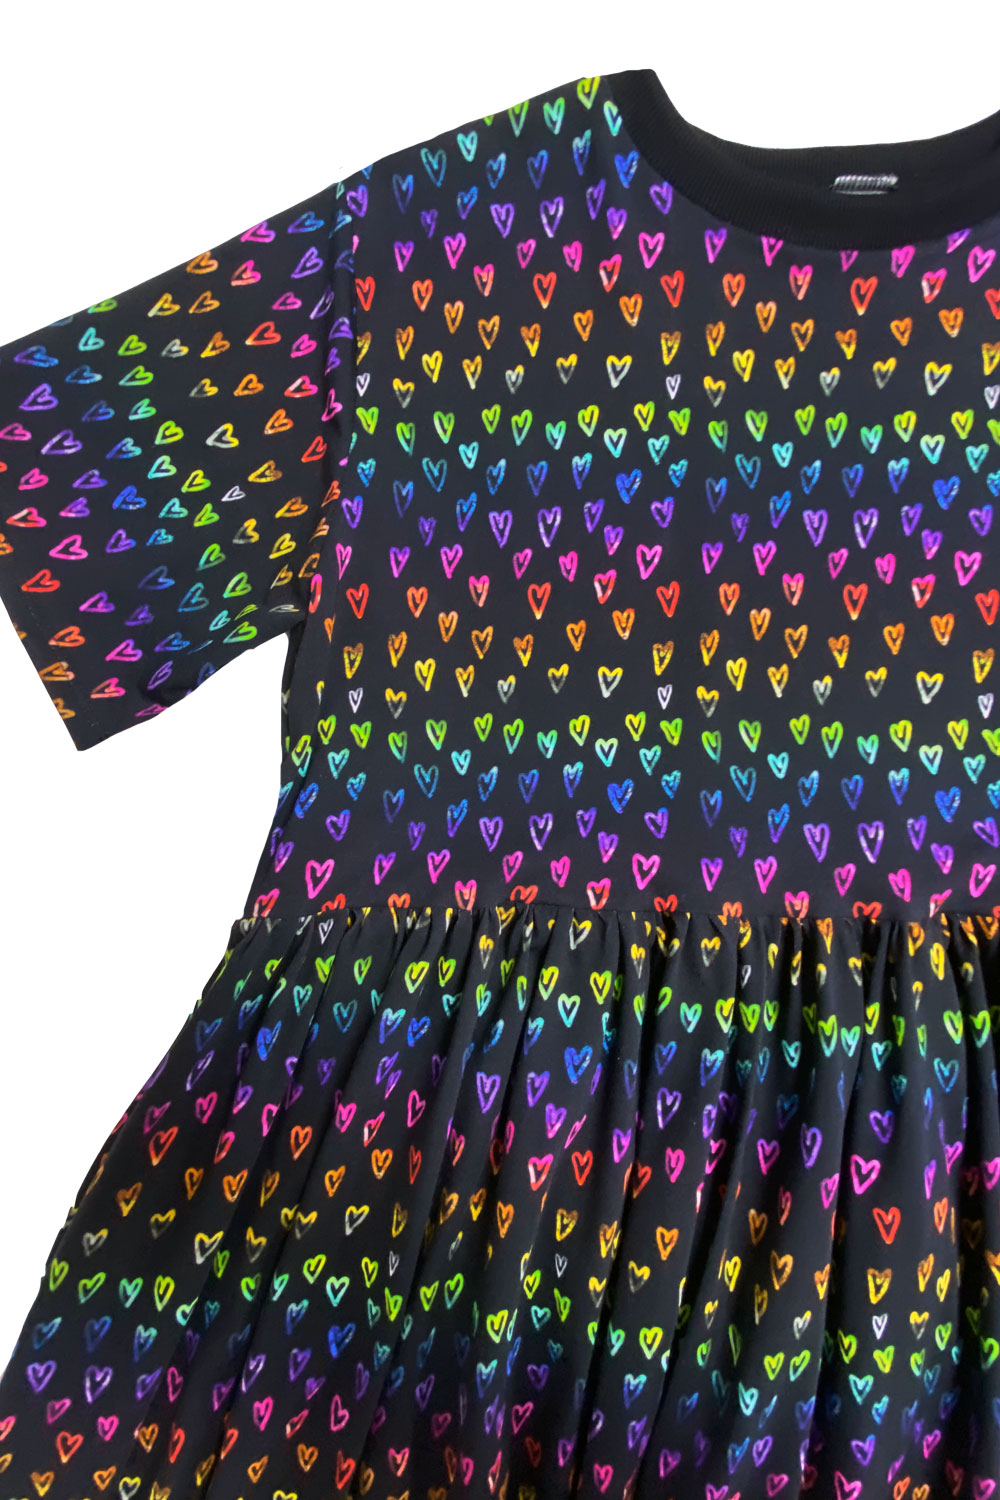 Amelia Dress in Rainbow Hearts